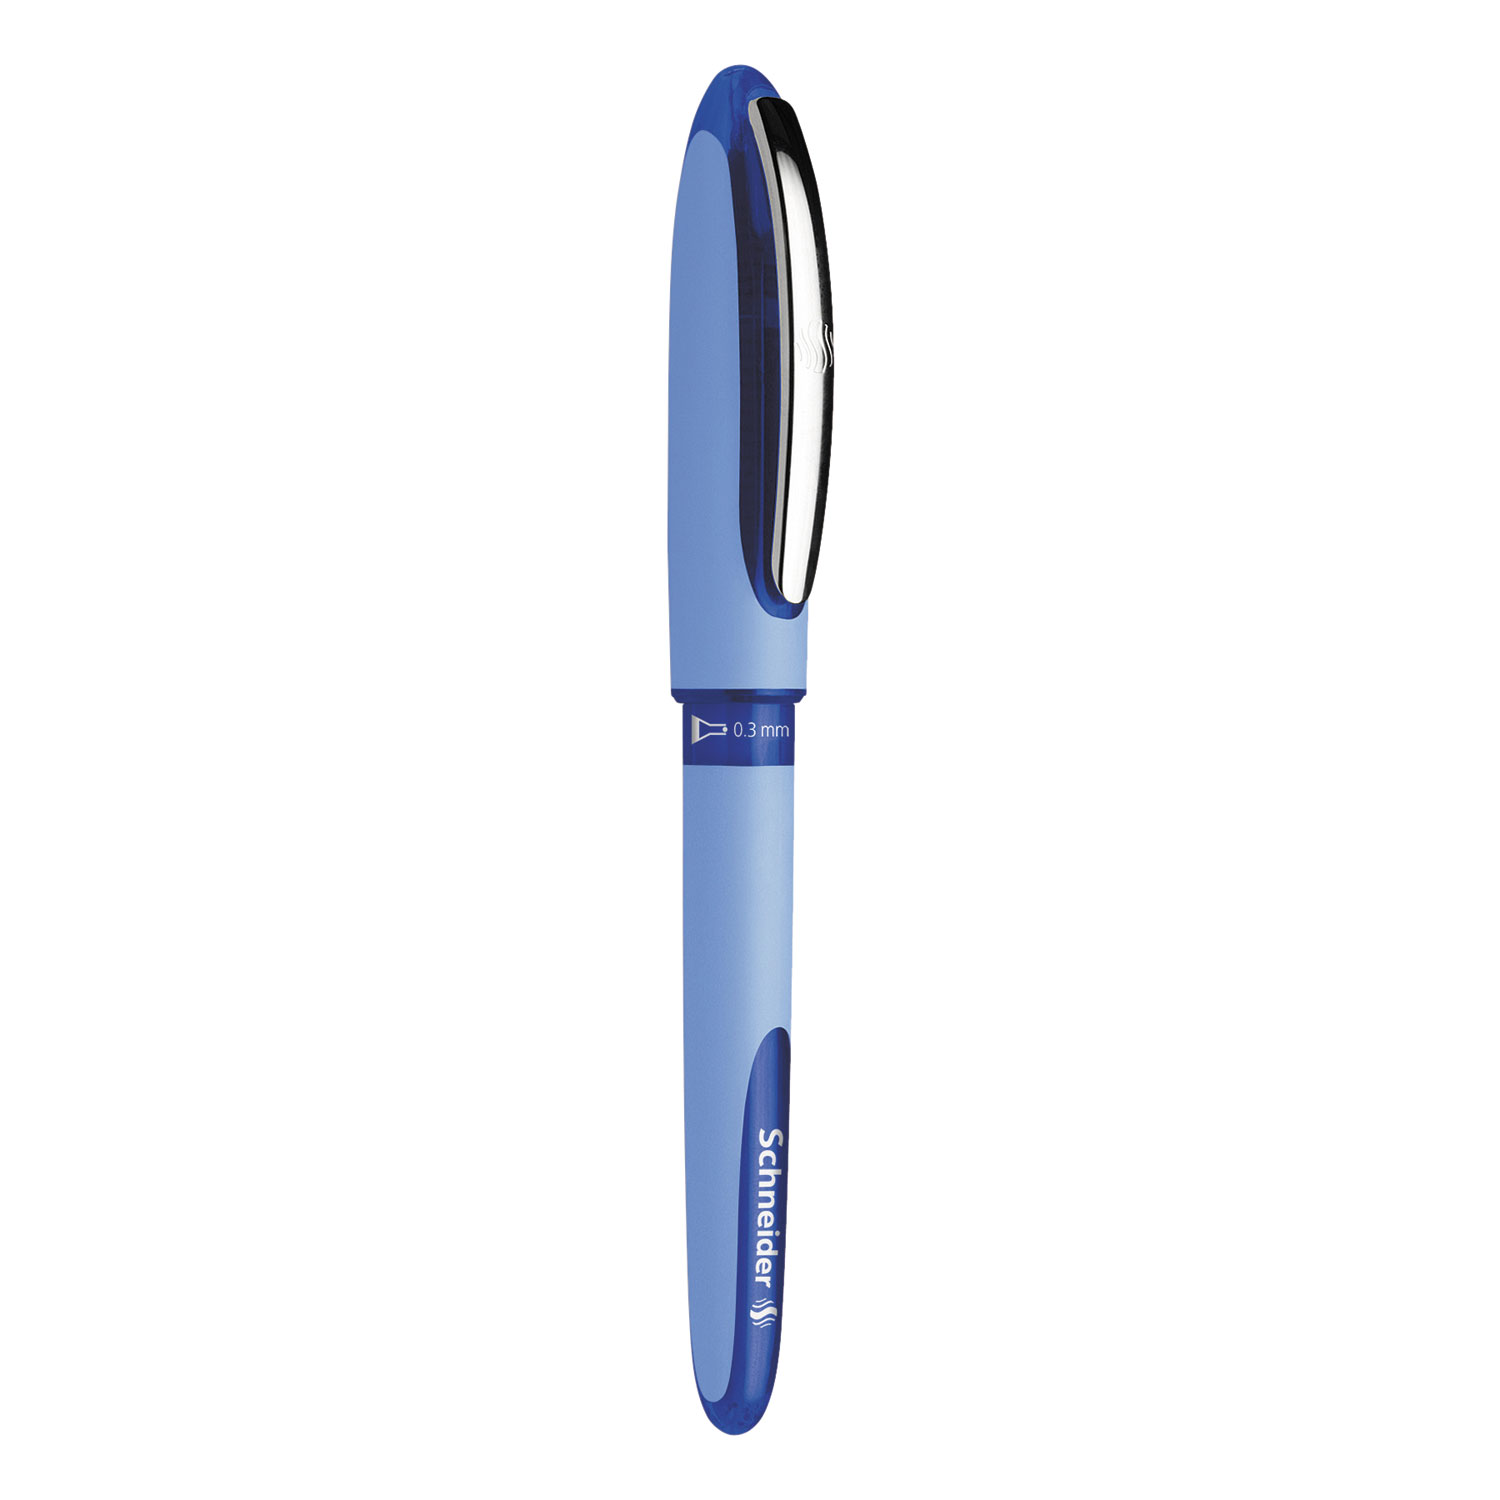  Stride 183403 Schneider One Hybrid Stick Roller Ball Pen, 0.3mm, Blue Ink/Barrel, 10/Box (STW183403) 